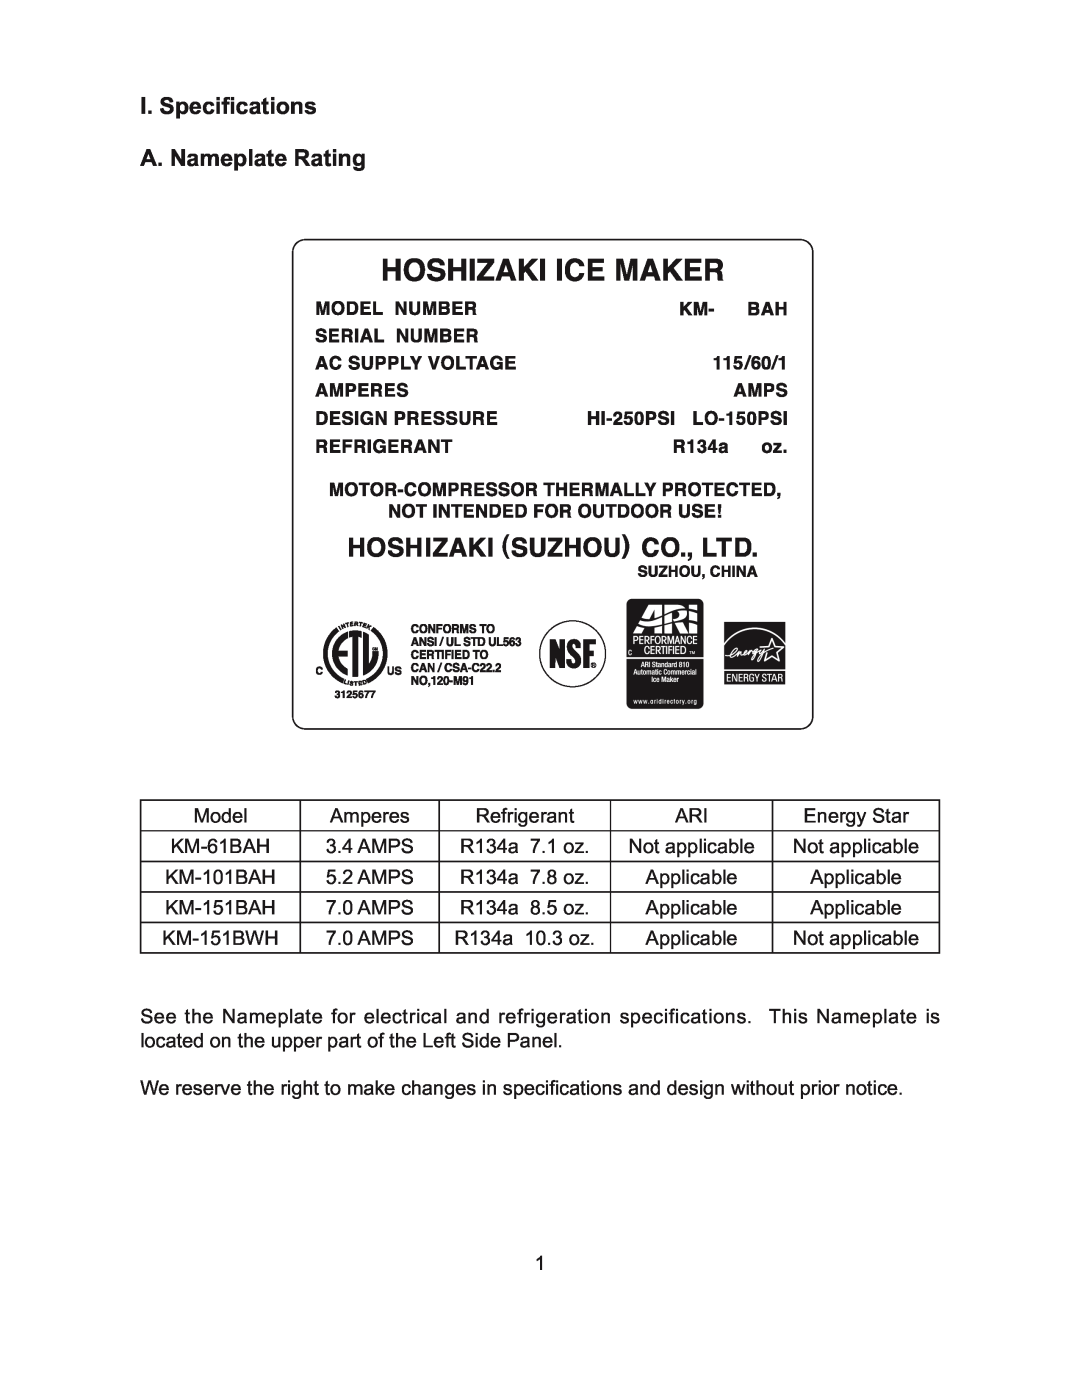 Hoshizaki KM-101BAH, KM-61BAH, KM-151BWH, KM-151BAH instruction manual I. Speciﬁcations A. Nameplate Rating 